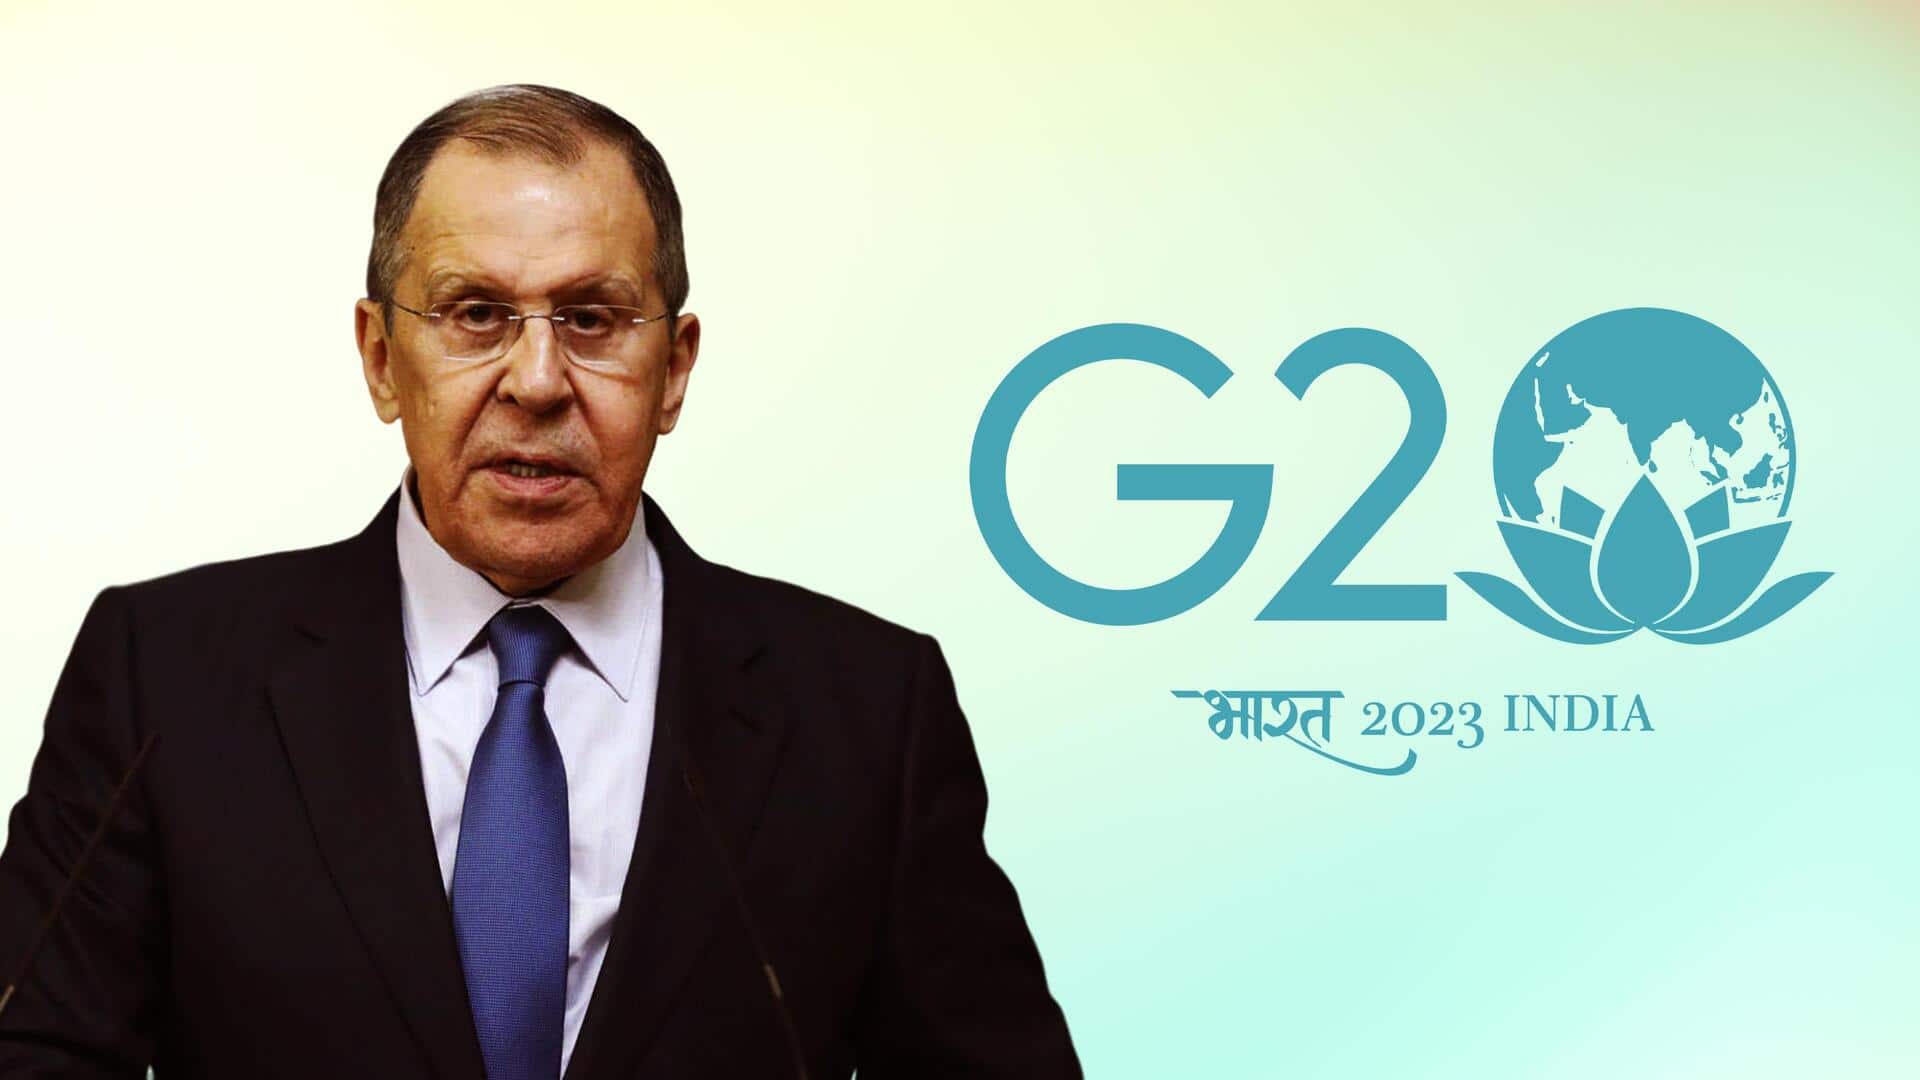 'Ukraine issue didn't hijack agenda': Russia lauds India's G20 Presidency